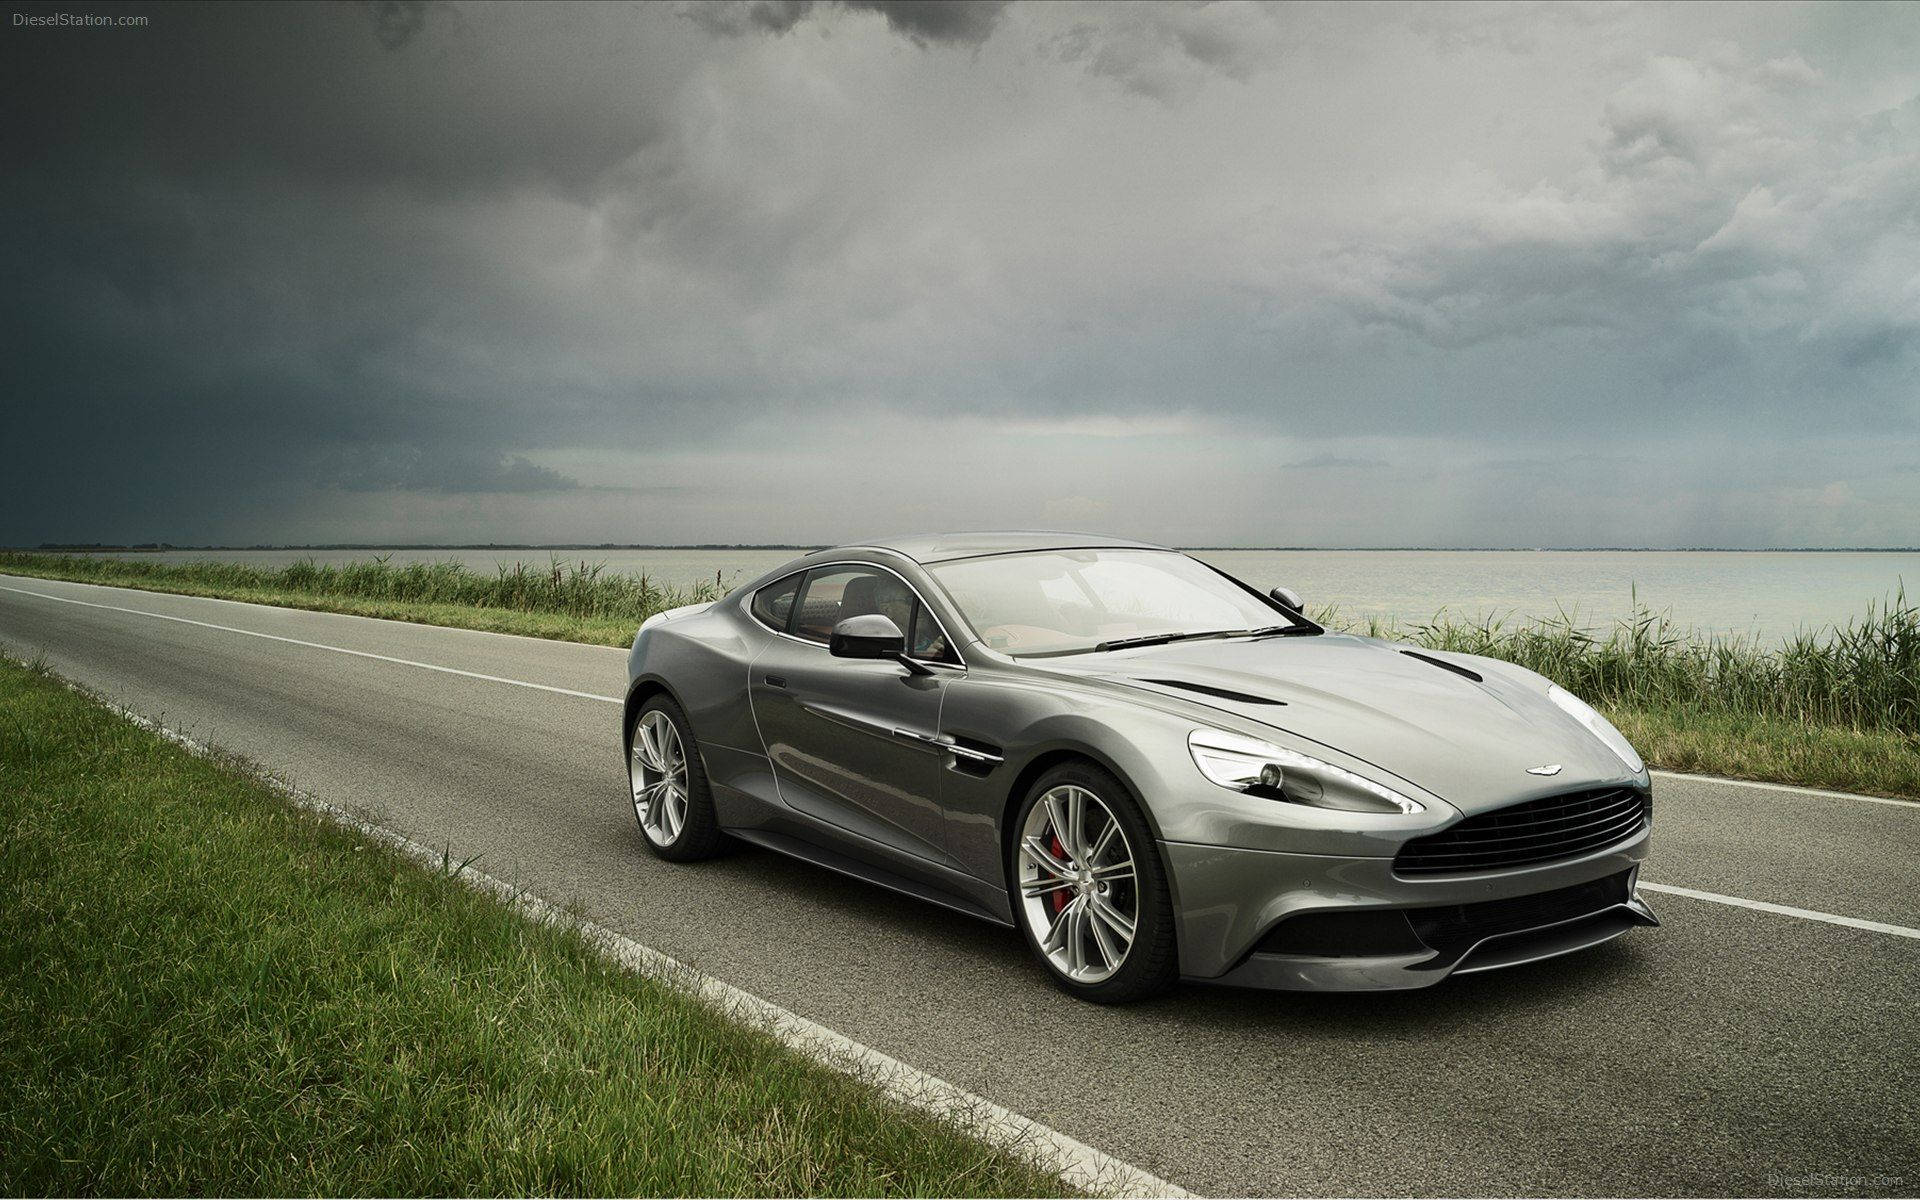 Aston Martin Vanquish S Background